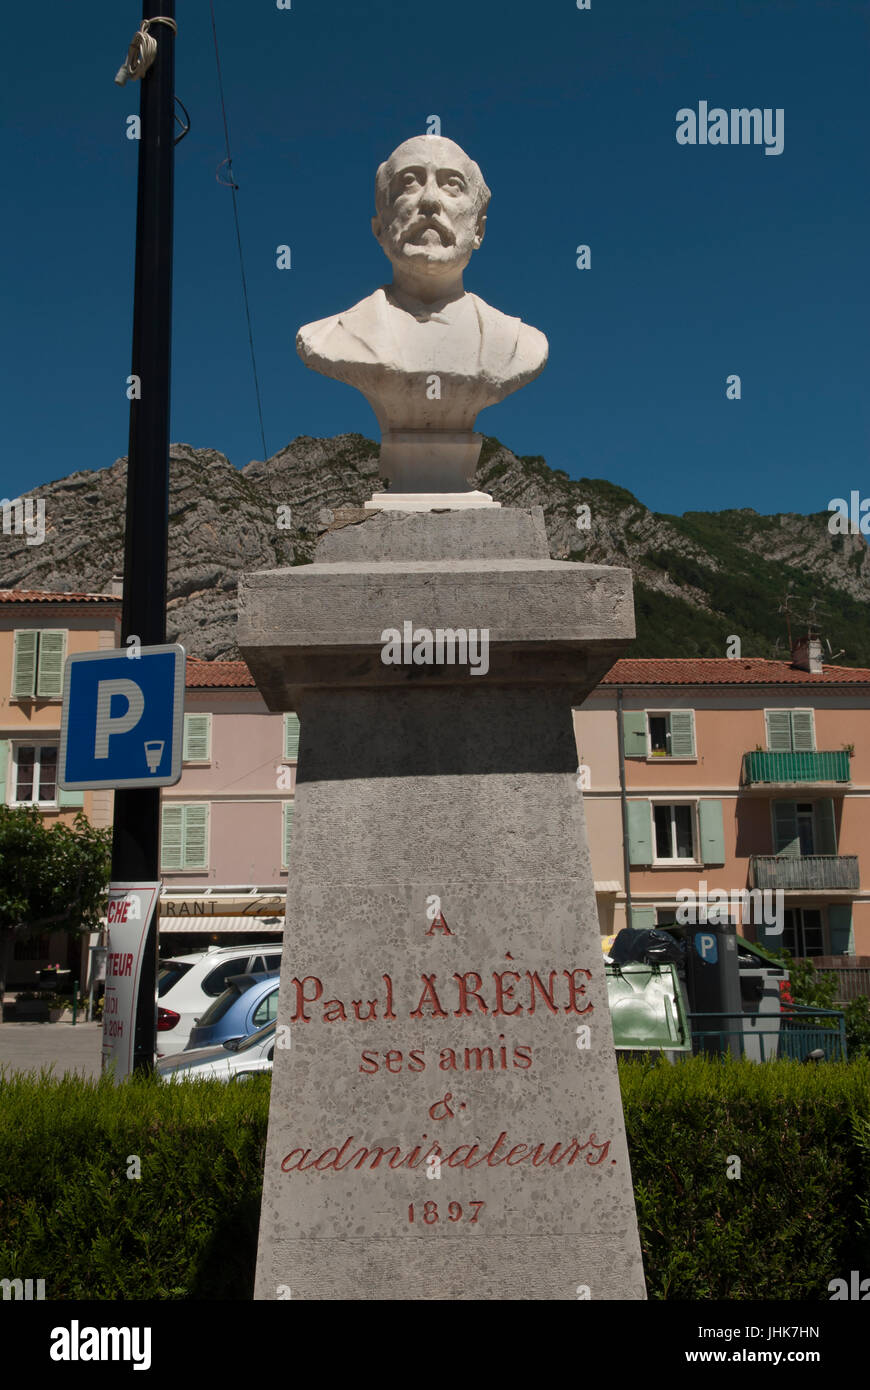 Paul Arene. Sisteron France statue French writer Poet France 2017 HOMER SYKES Stock Photo